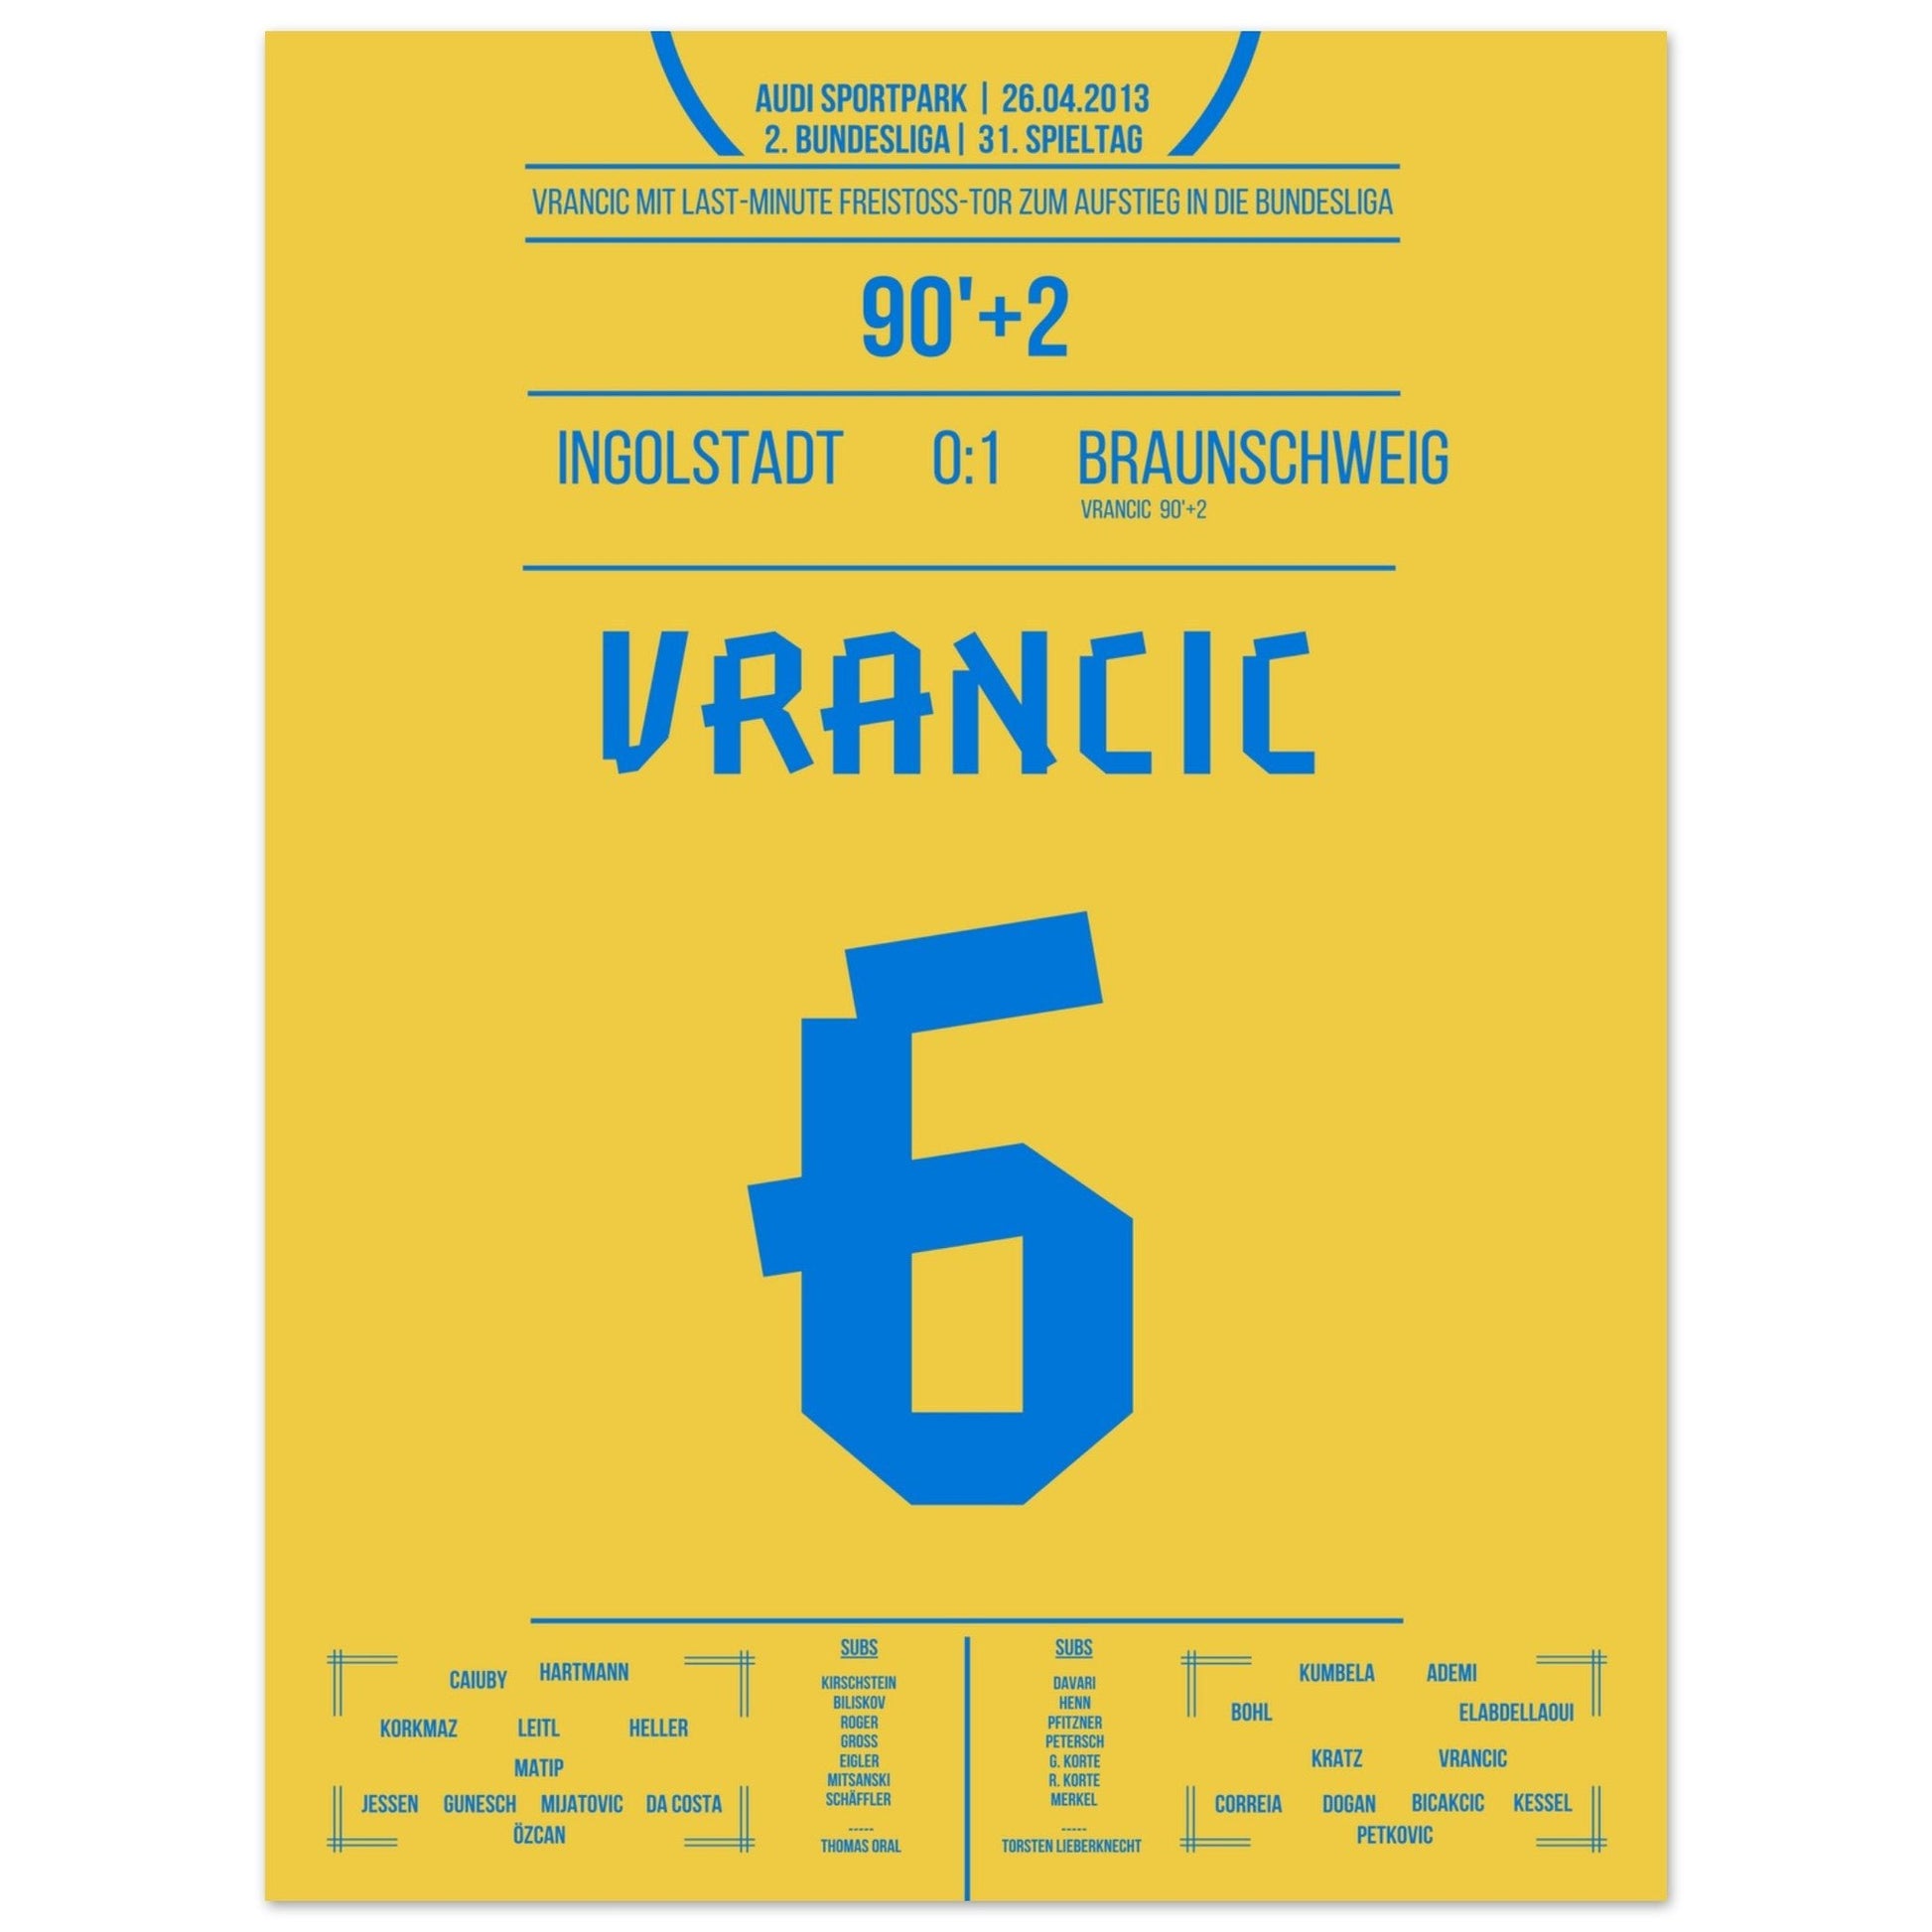 Vrancic's Freistoss-Treffer zum Bundesliga-Aufstieg 2013 45x60-cm-18x24-Ohne-Rahmen